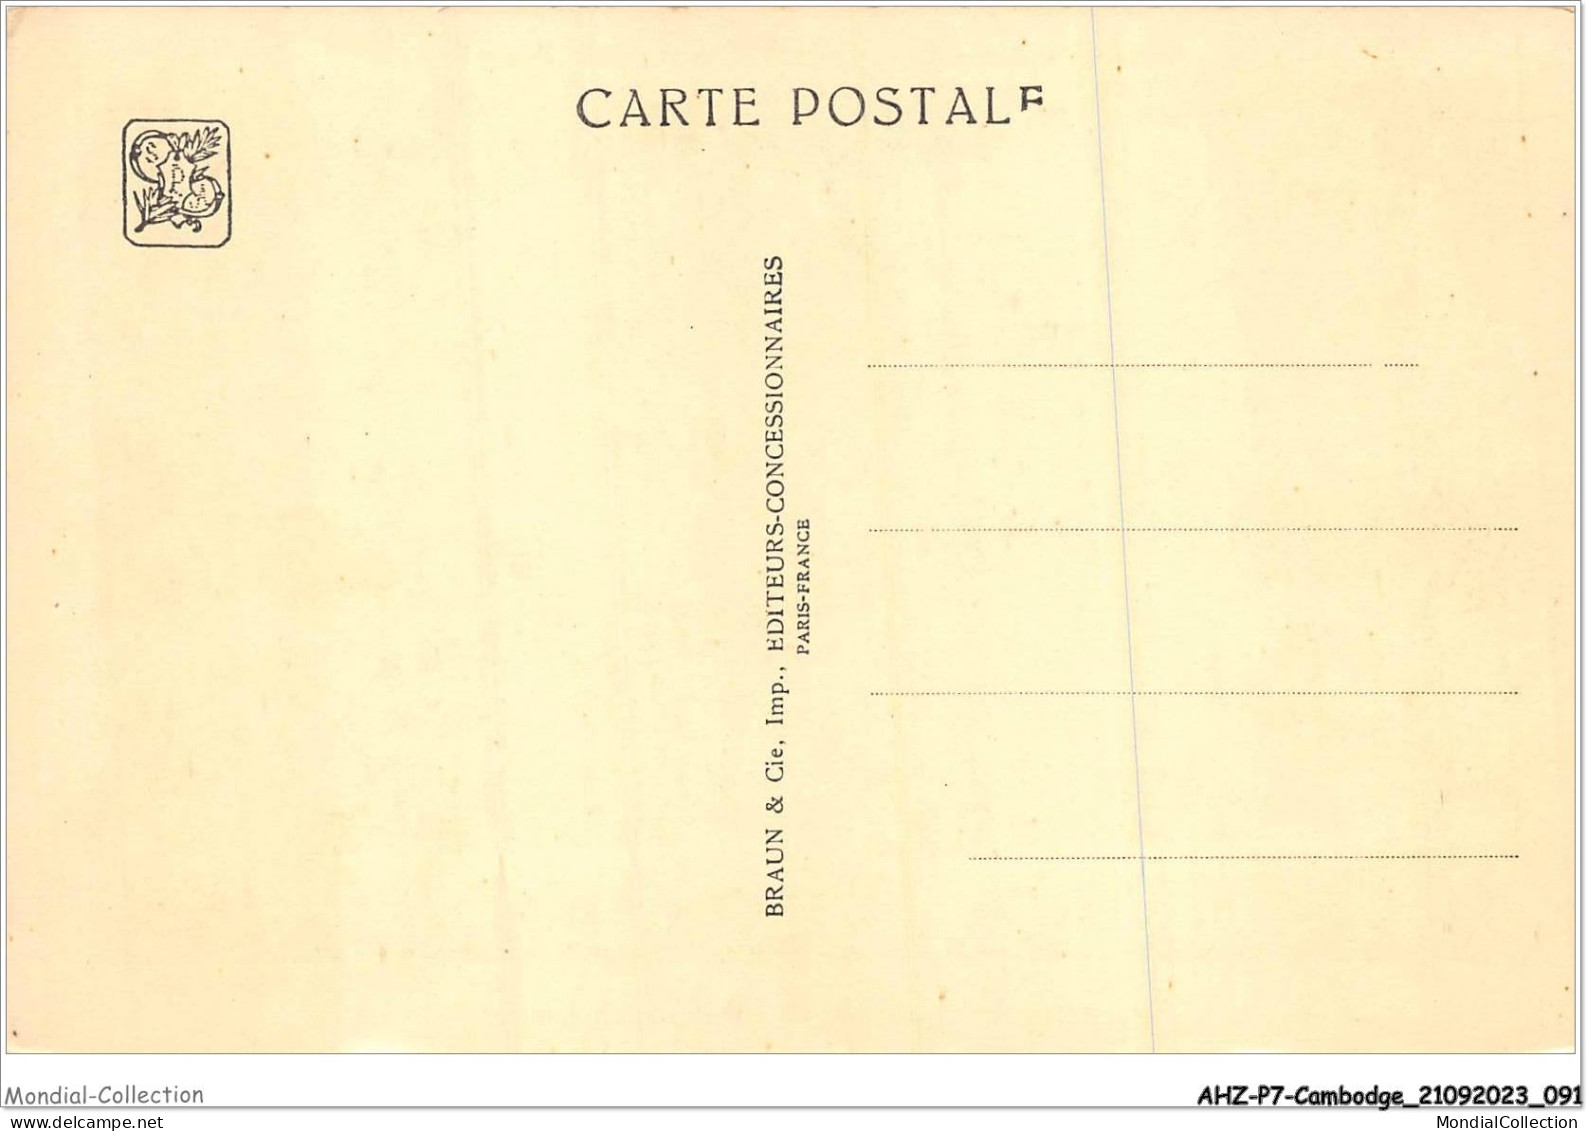 AHZP7-CAMBODGE-0641 - EXPOSITION COLONIALE INTERNATIONALE - PARIS 1931 - TEMPLE D'ANGKOR-VAT - Cambodge